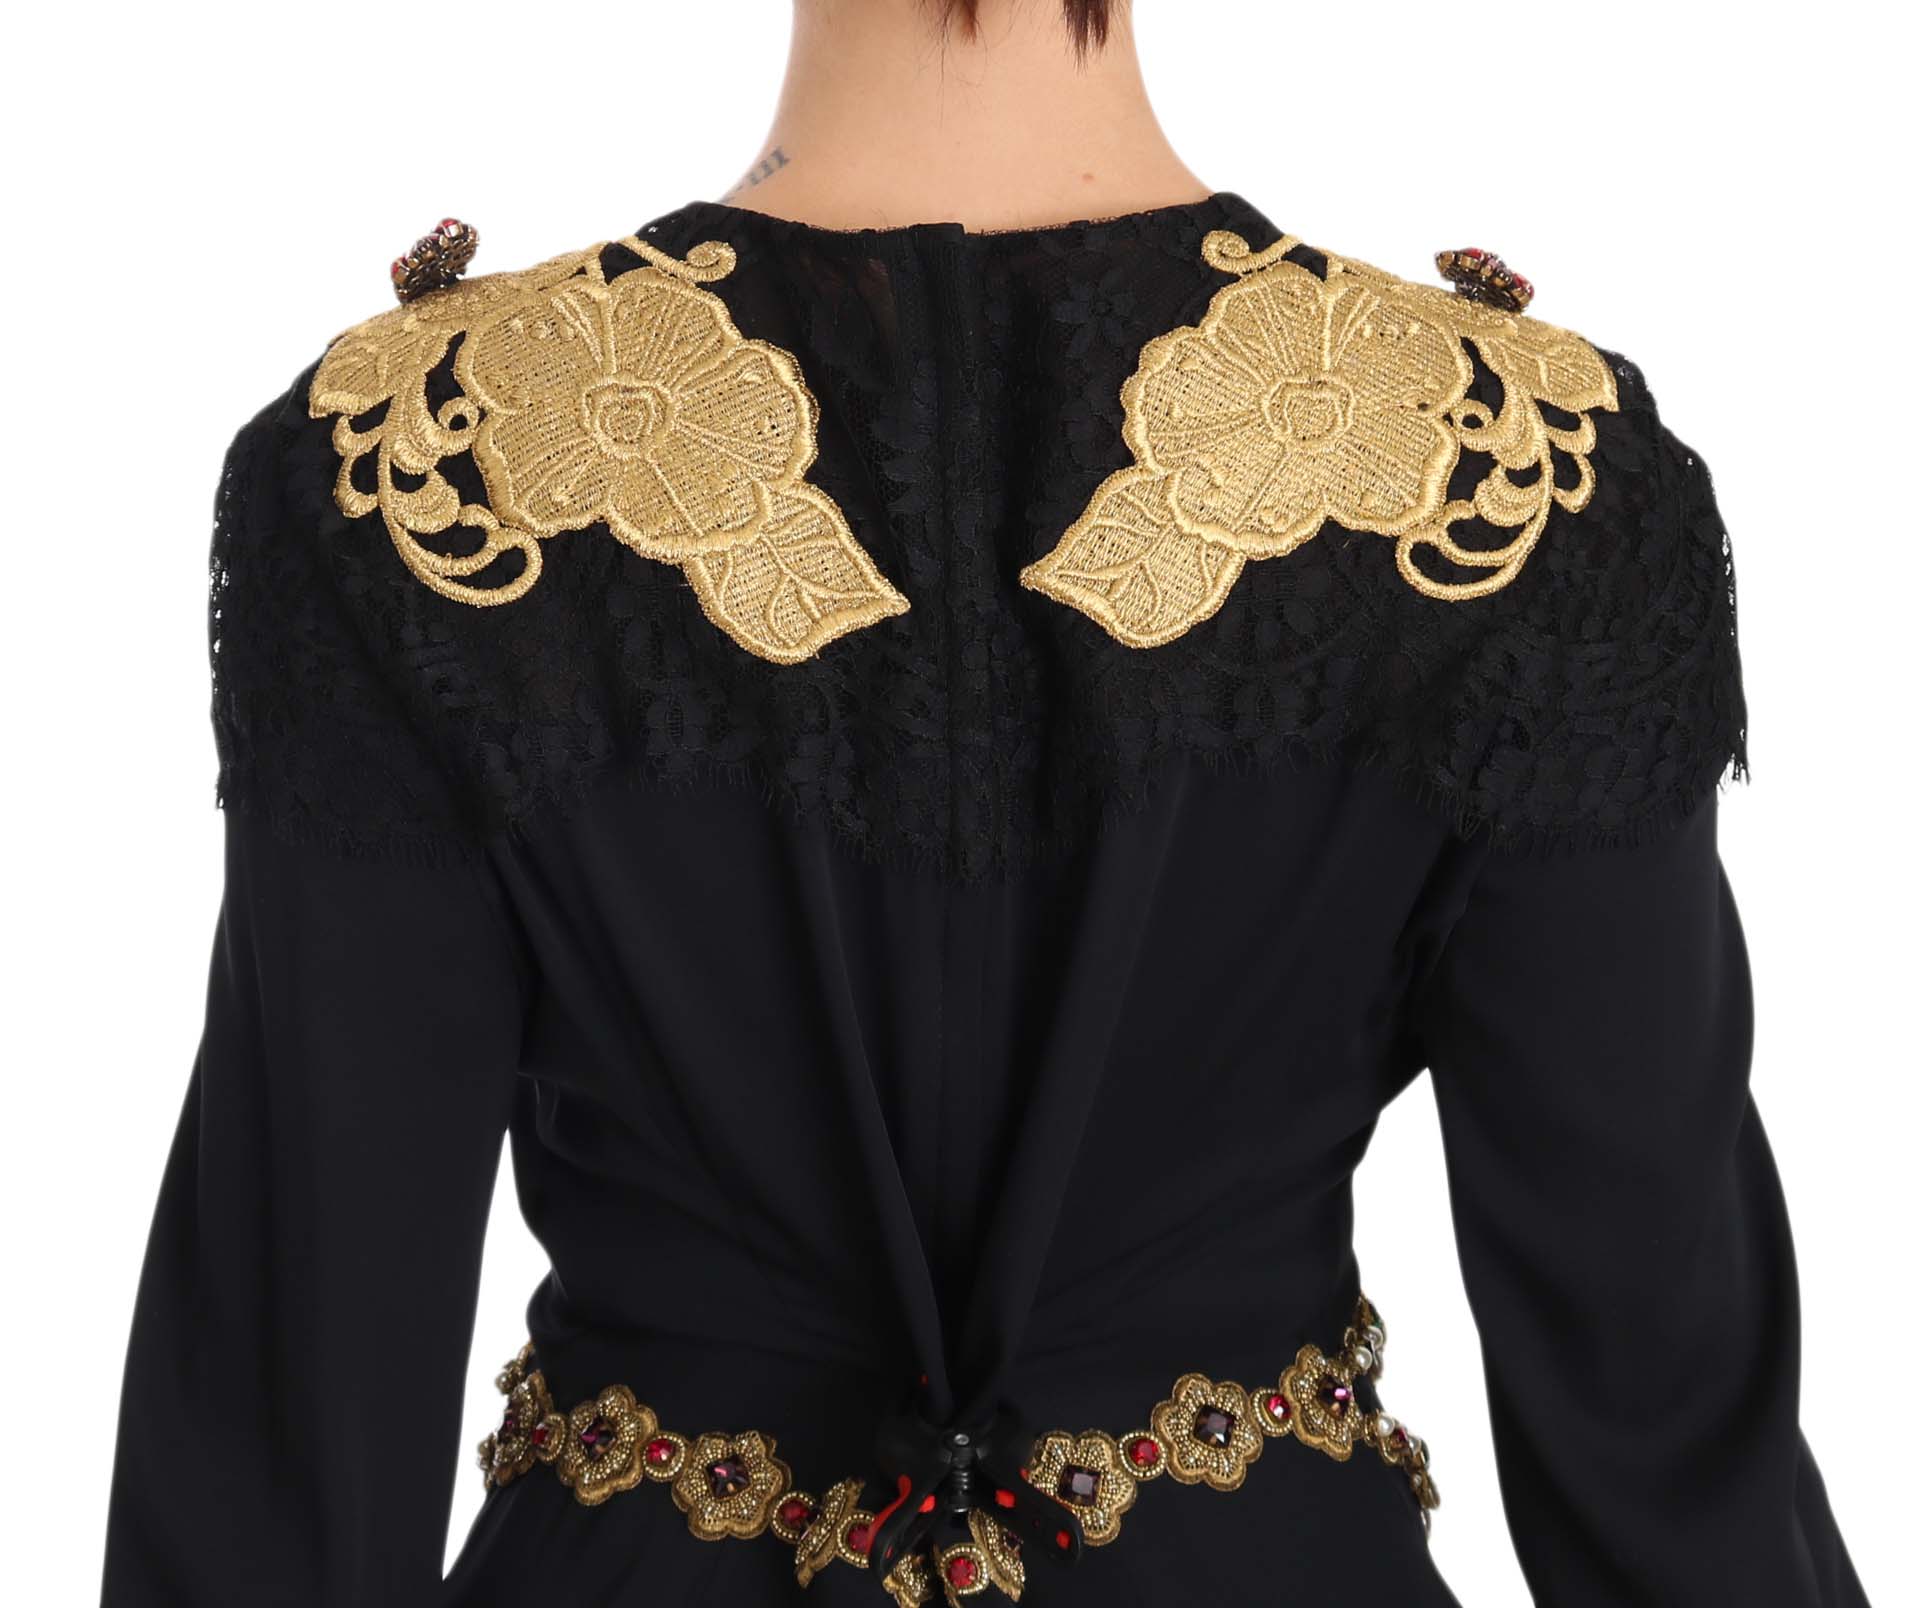 Dolce & Gabbana Elegant Maxi Black Dress with Gold Detailing